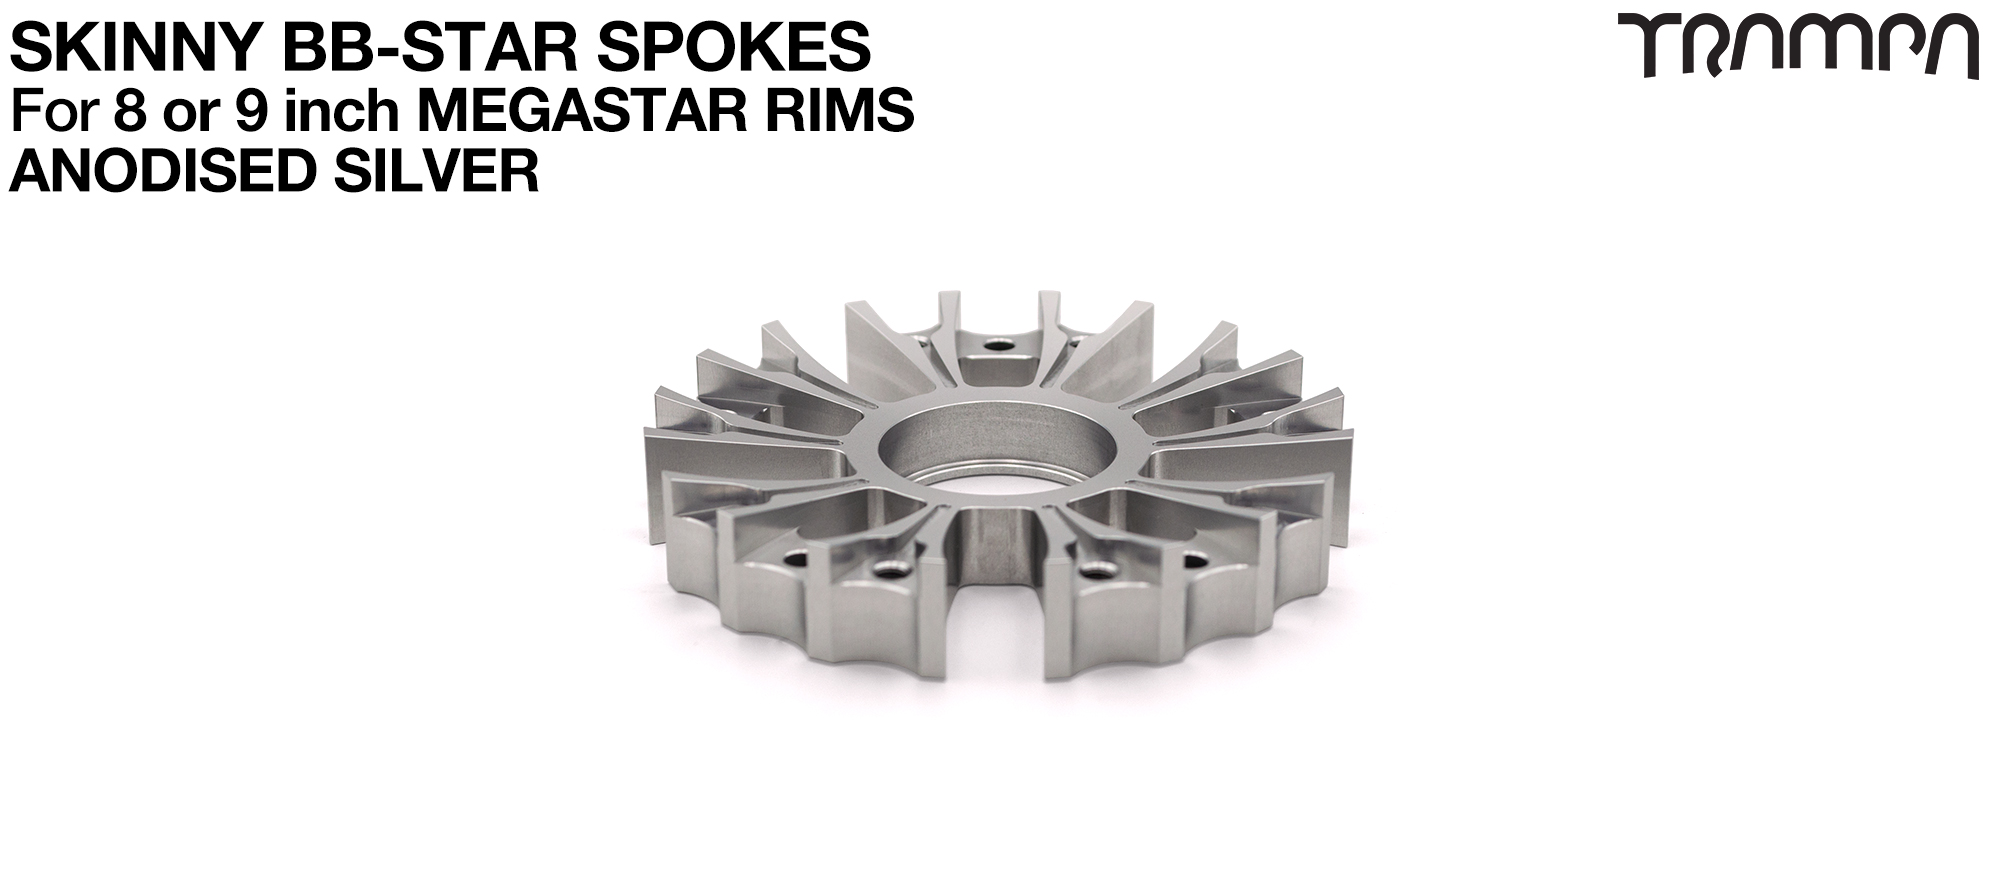 BBStar SKINNY Spoke for MEGASTAR 8 & 9 Rims - Extruded T6 Heat Treated & CNC Precision milled - SILVER